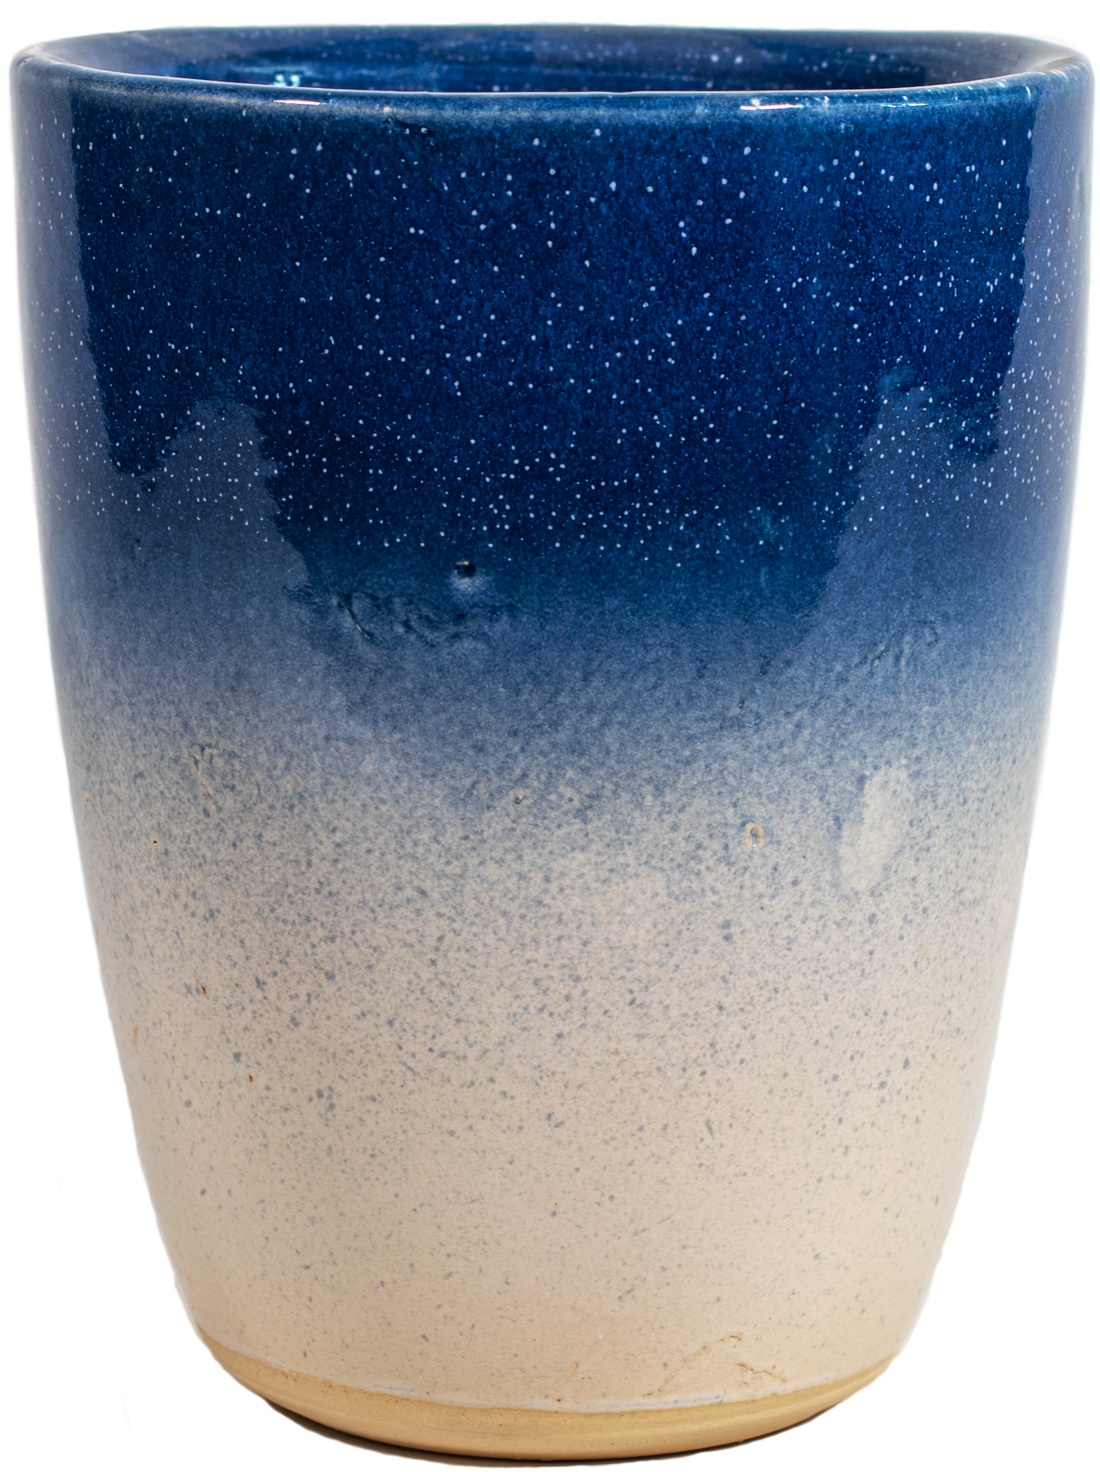 tall ceramic vase planter in blue and white speckled glaze